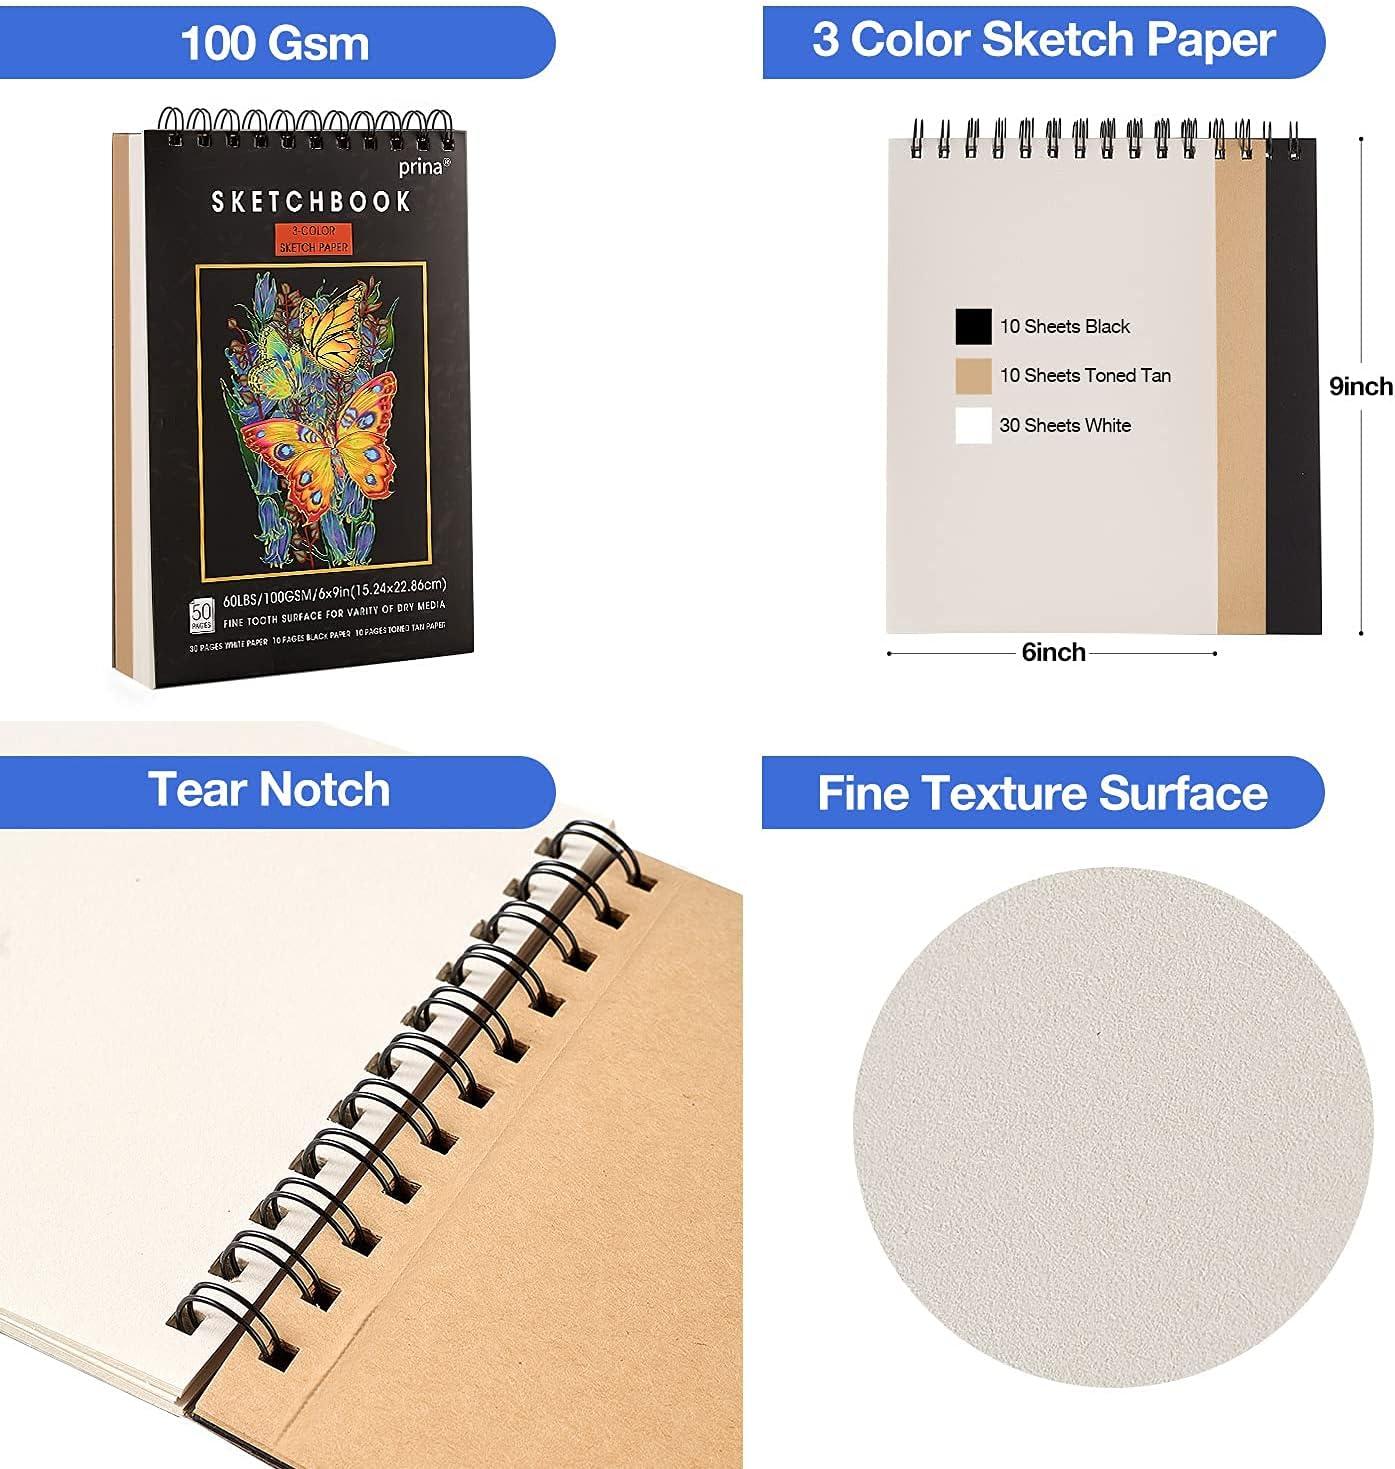 76 Drawing Sketching Kit Set - Pro Art Supplies with Sketchbook